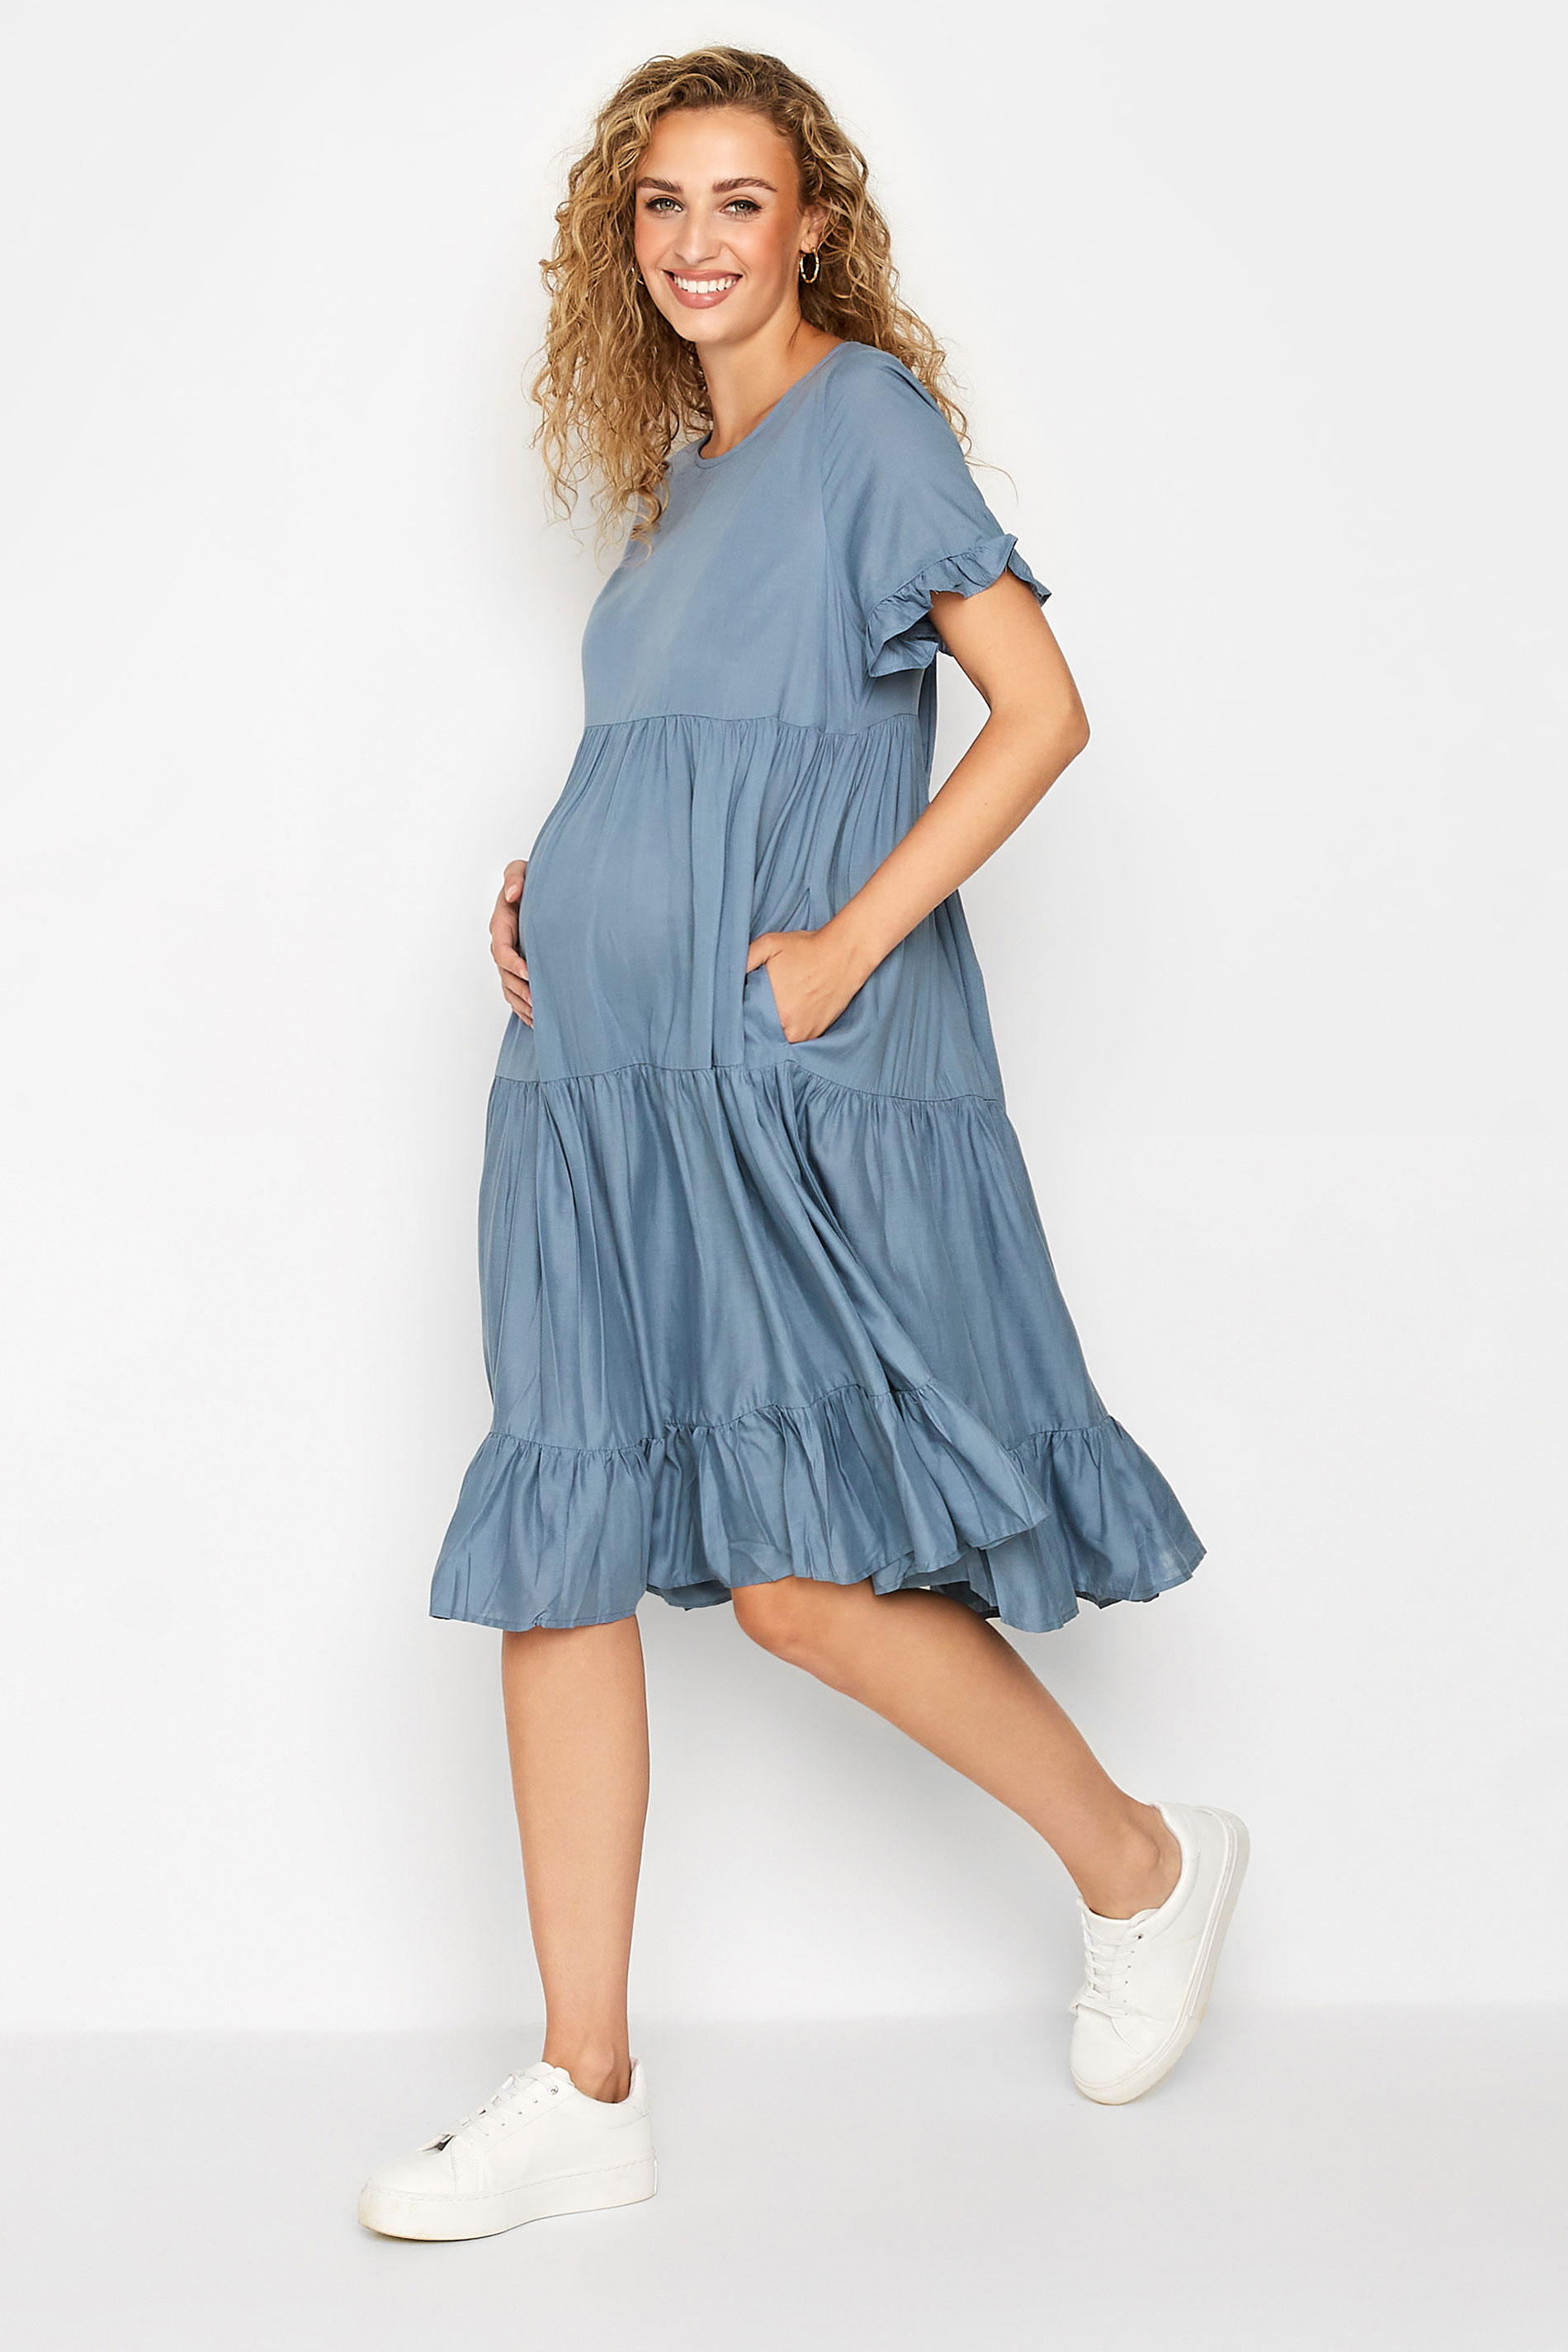 Tall Women's LTS Maternity Blue Tiered Smock Dress | Long Tall Sally 1